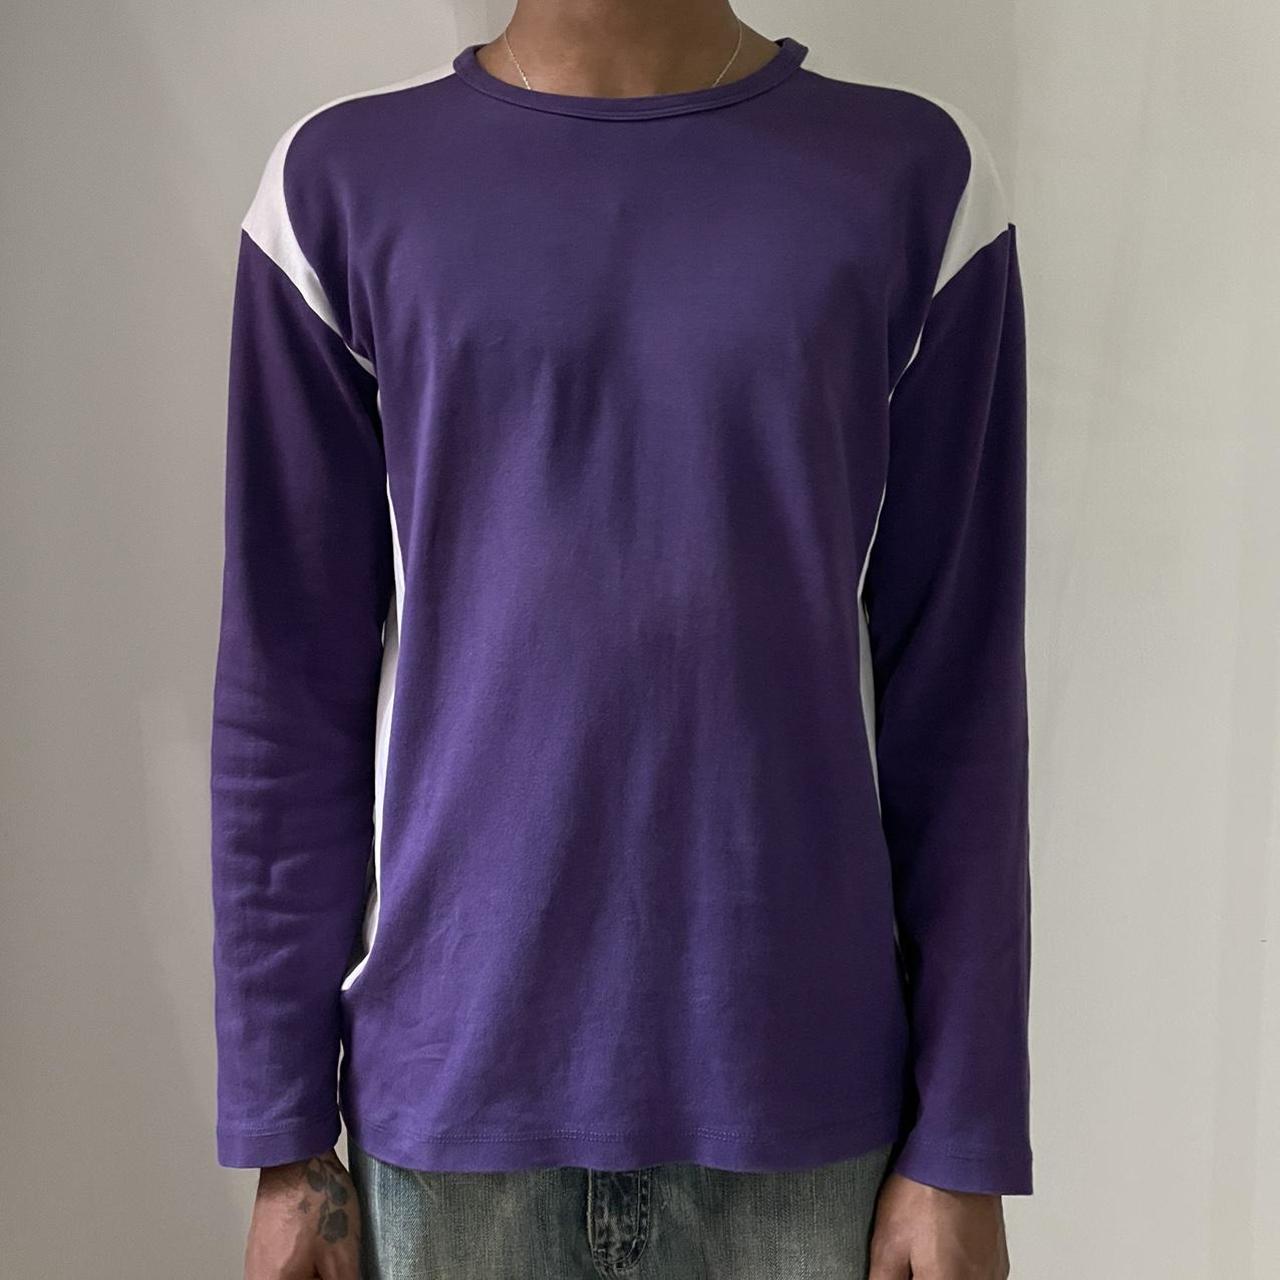 Bikkembergs Men's Purple and Silver Shirt